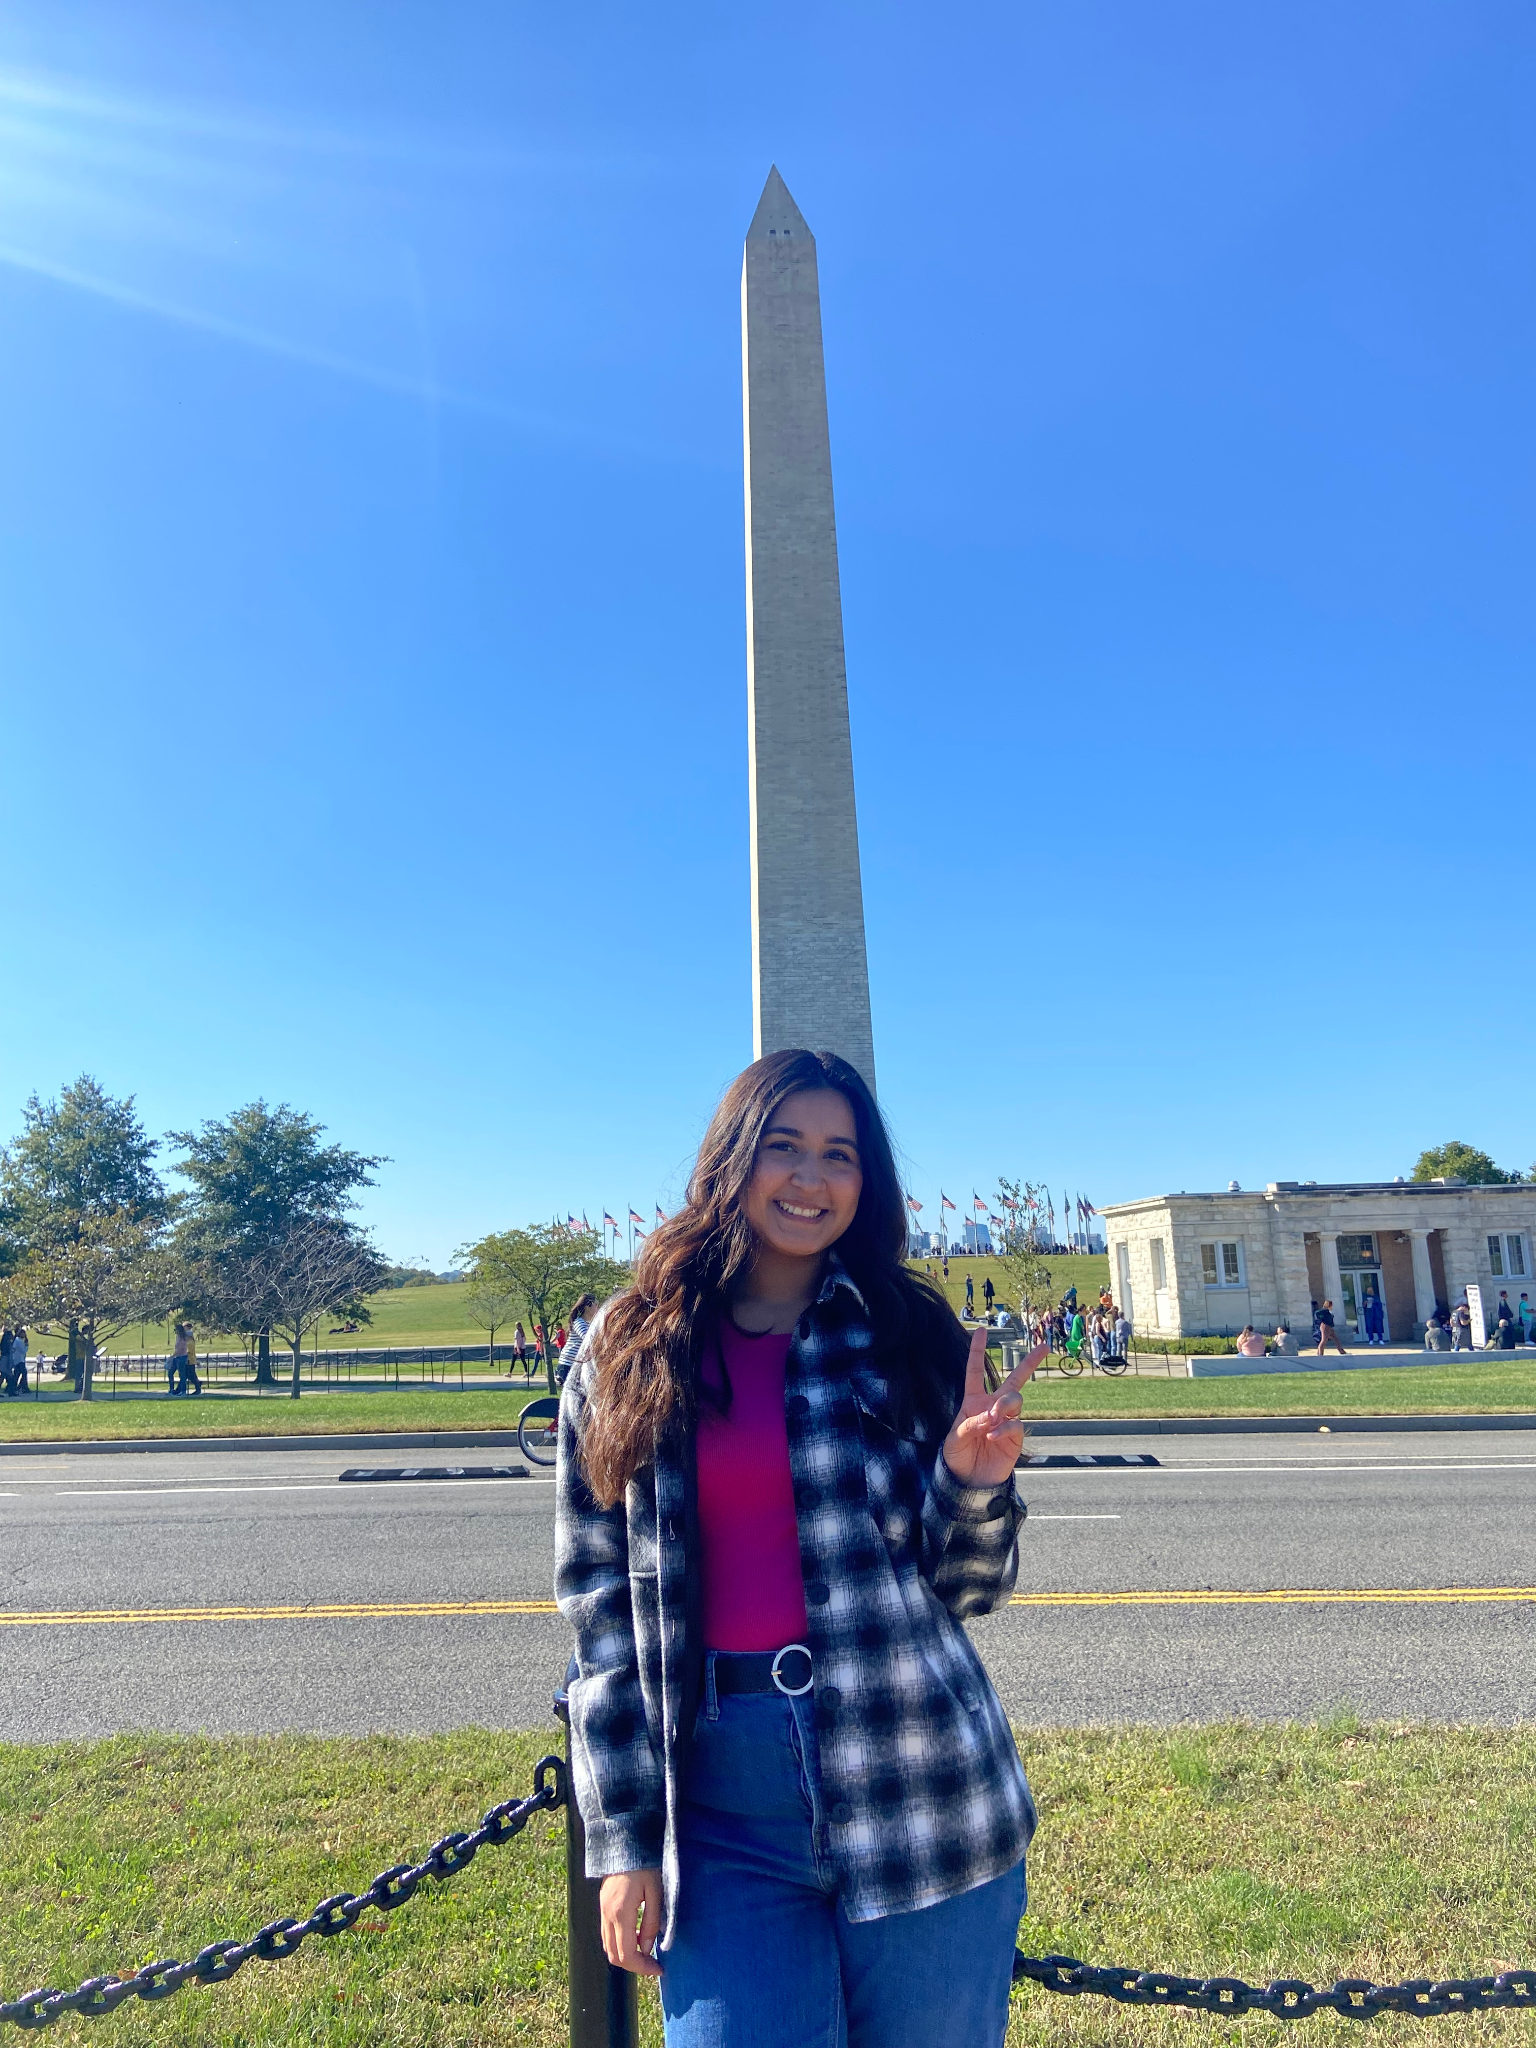 Jennifer Ramirez standing in front of the Washington Monument in Washington D.C.